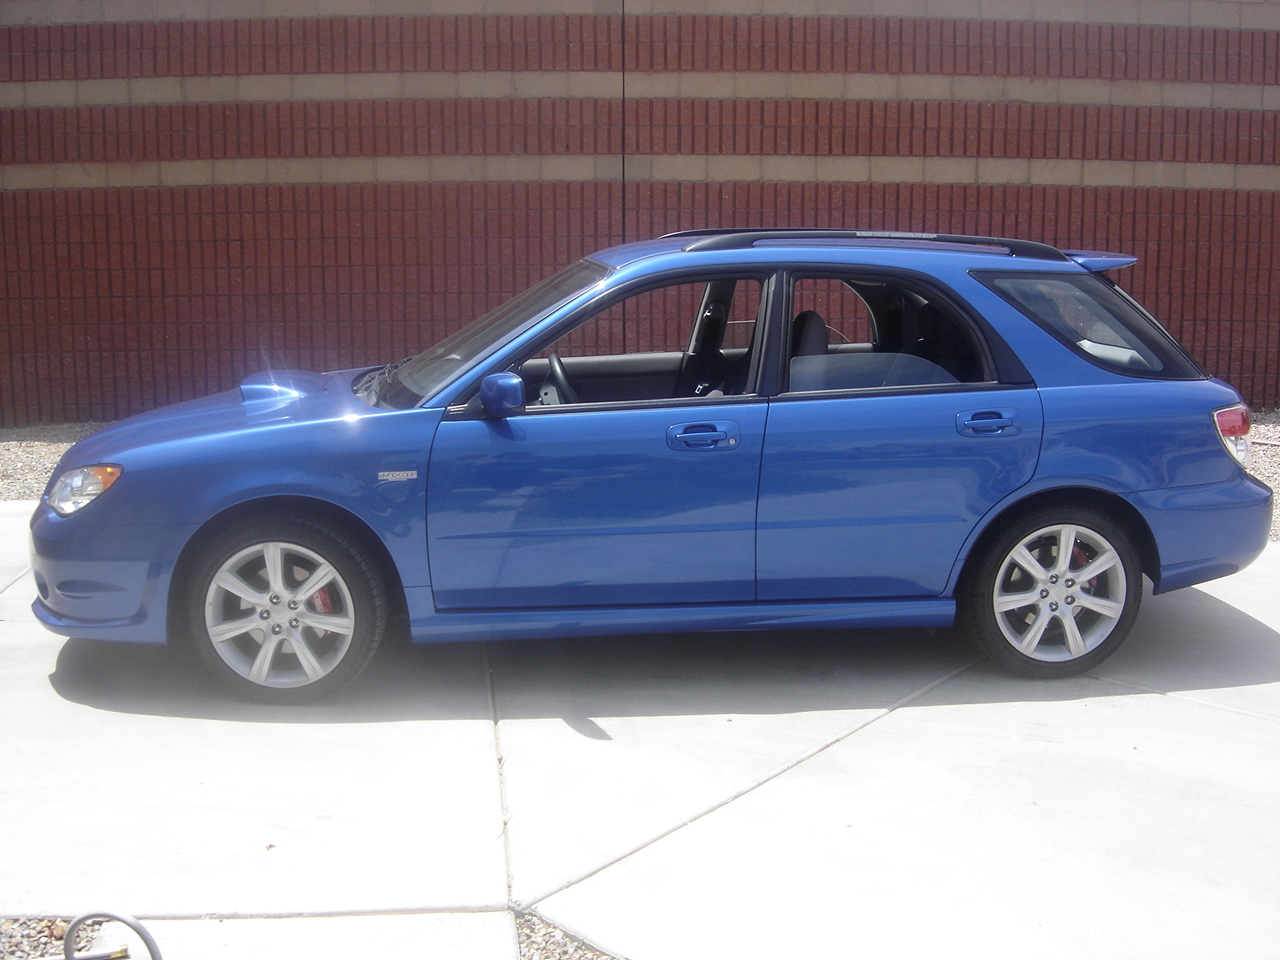  2007 Subaru Impreza wrx wagon